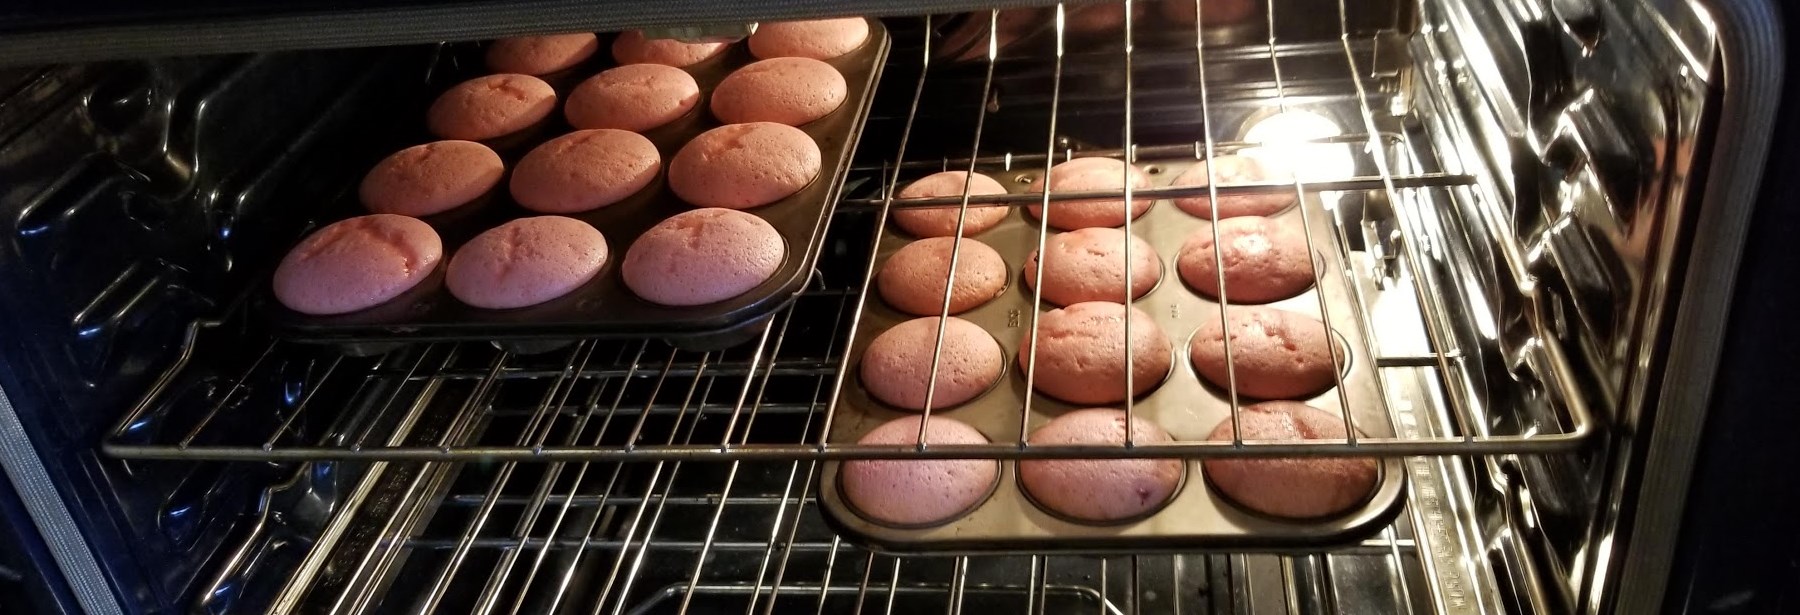 Muffins baking inside an oven